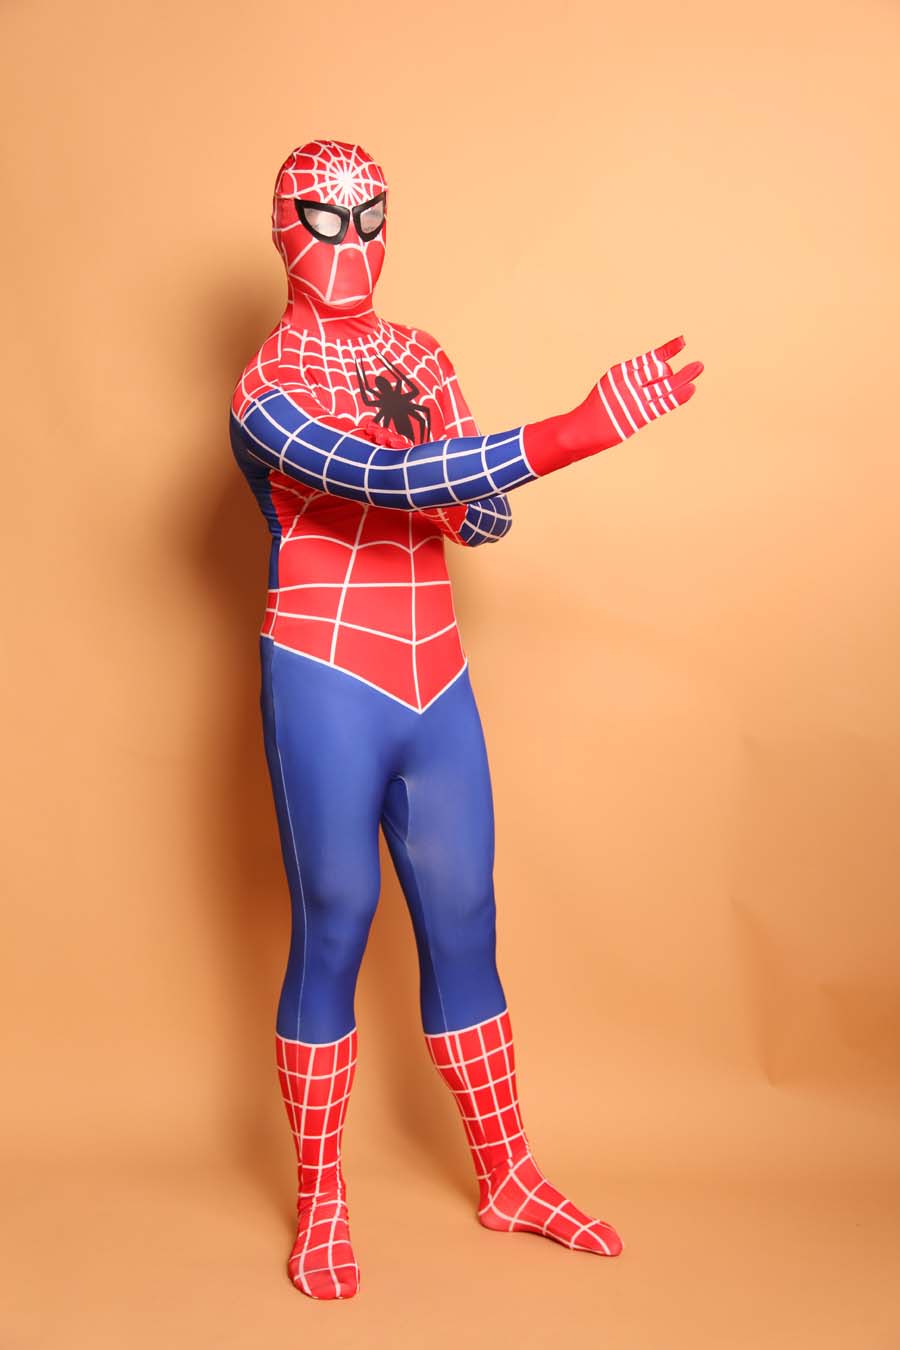 Classic Red And Blue Spiderman Superhero Costume